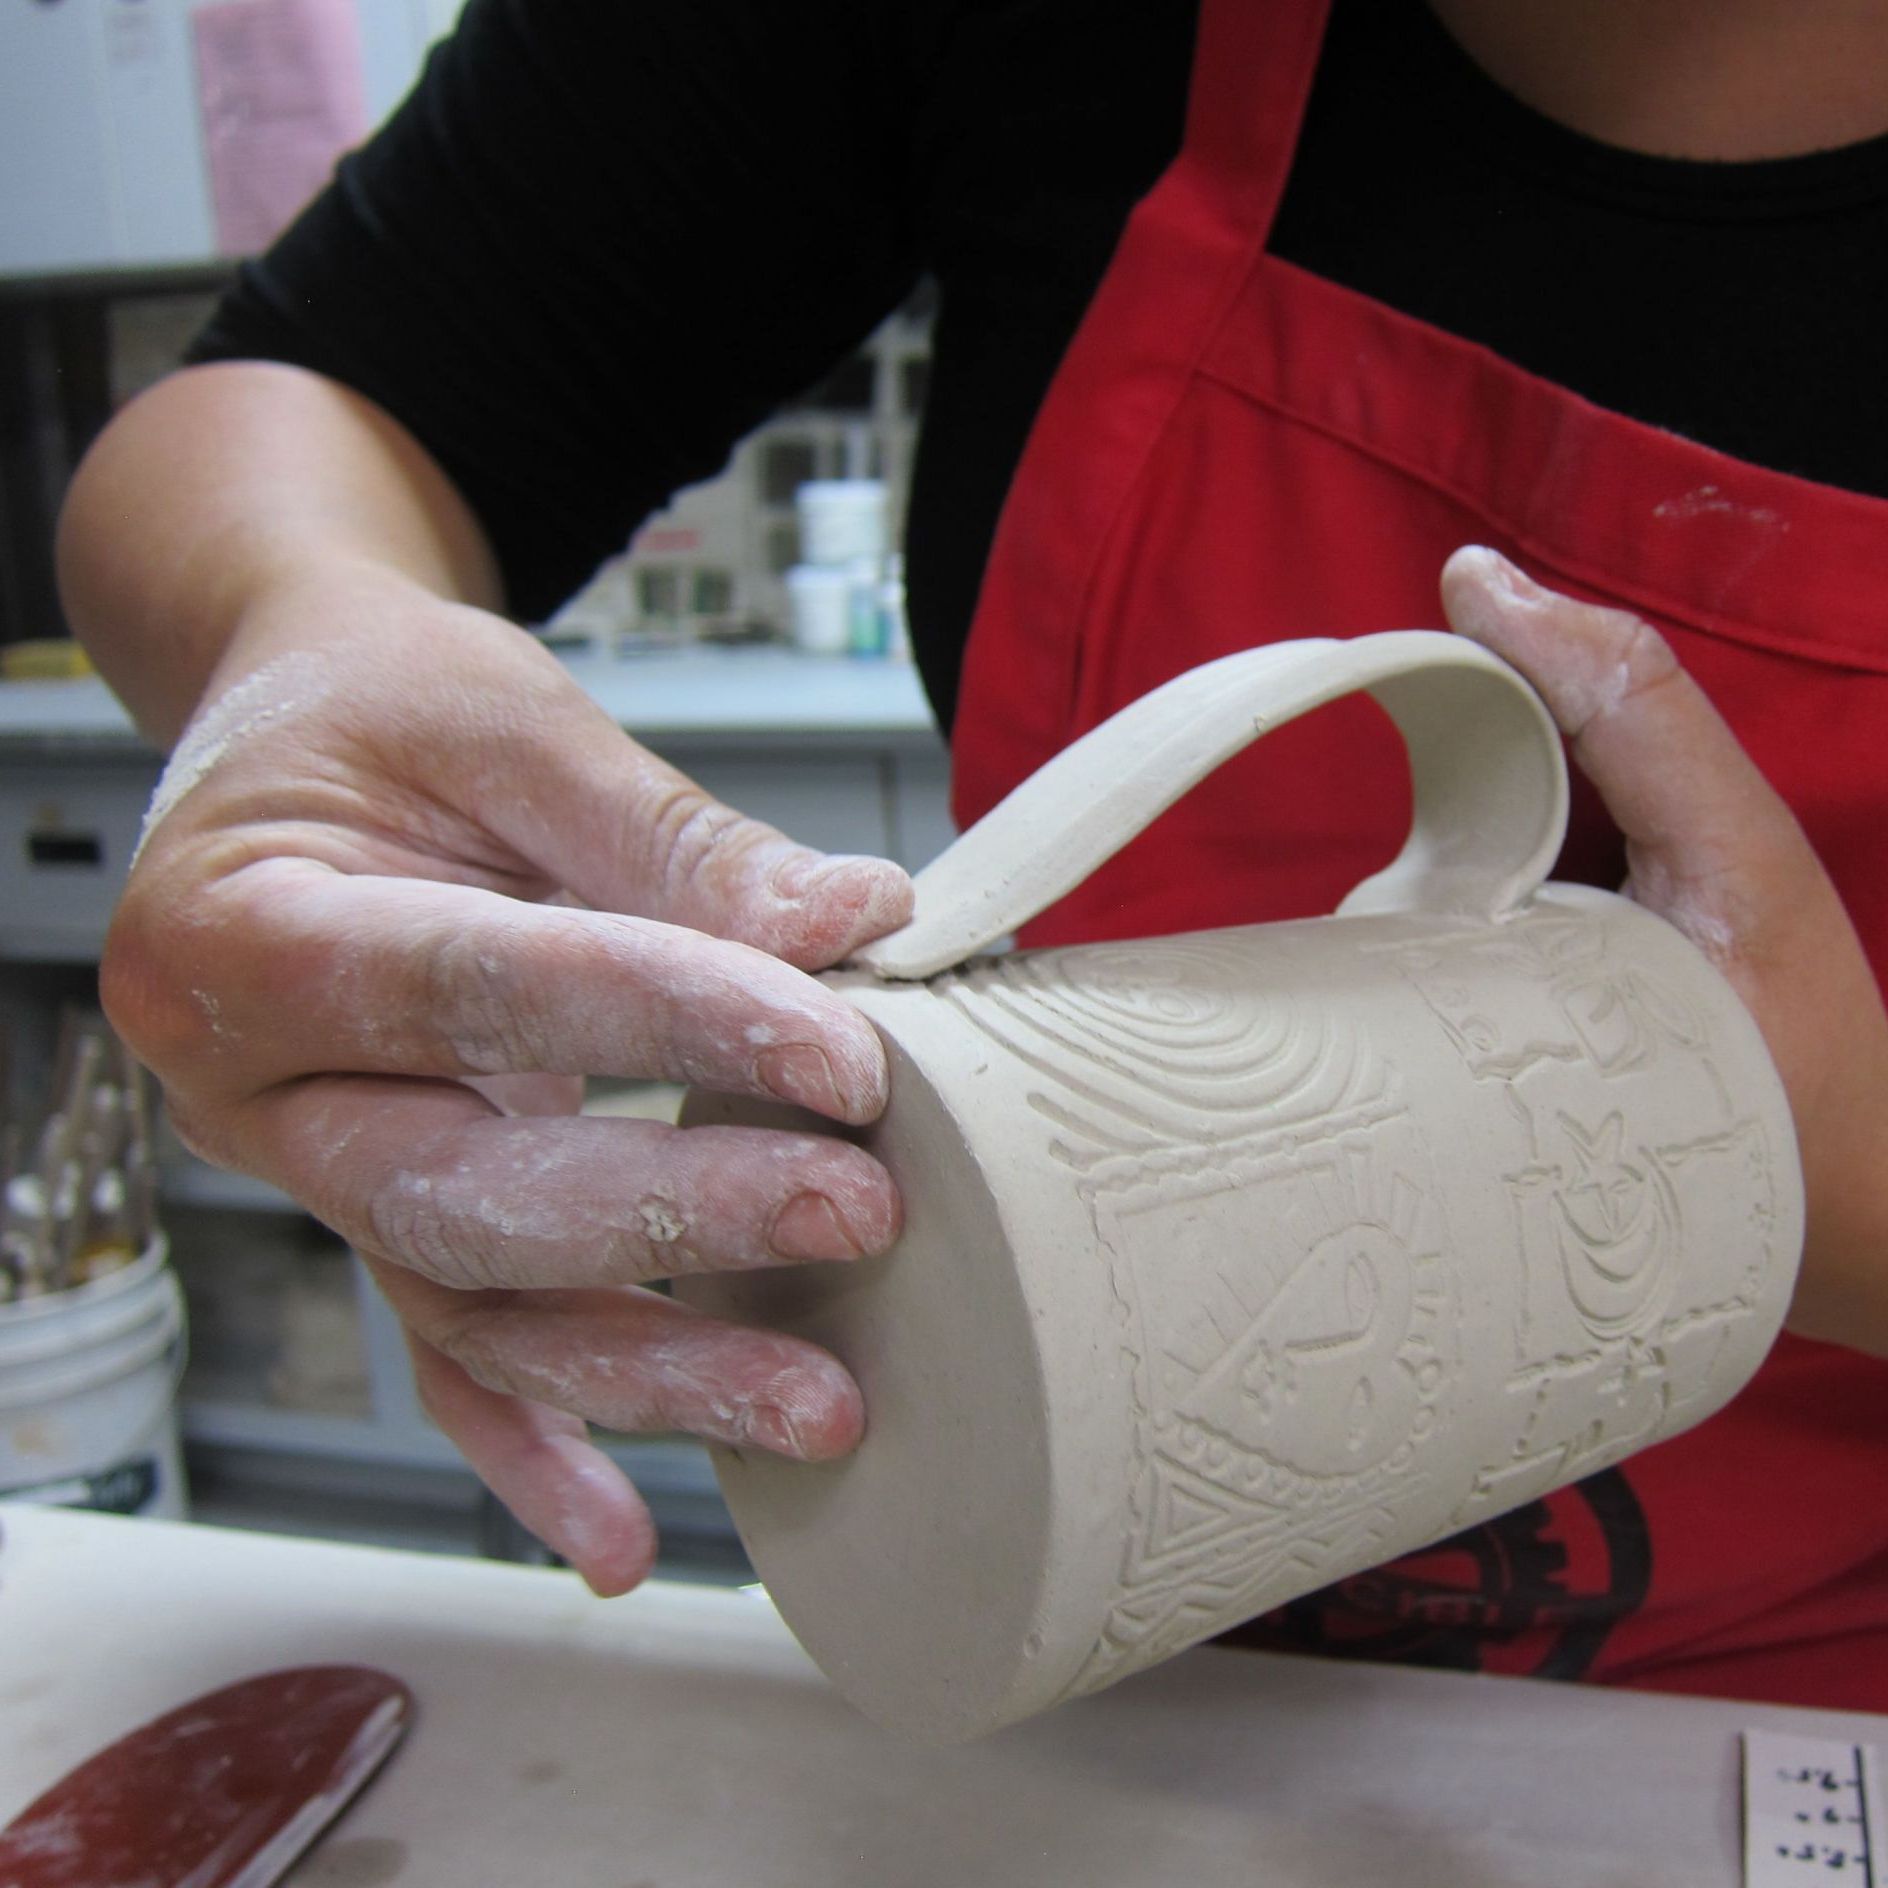 Art Advantage Pottery Tool Kit And Apron